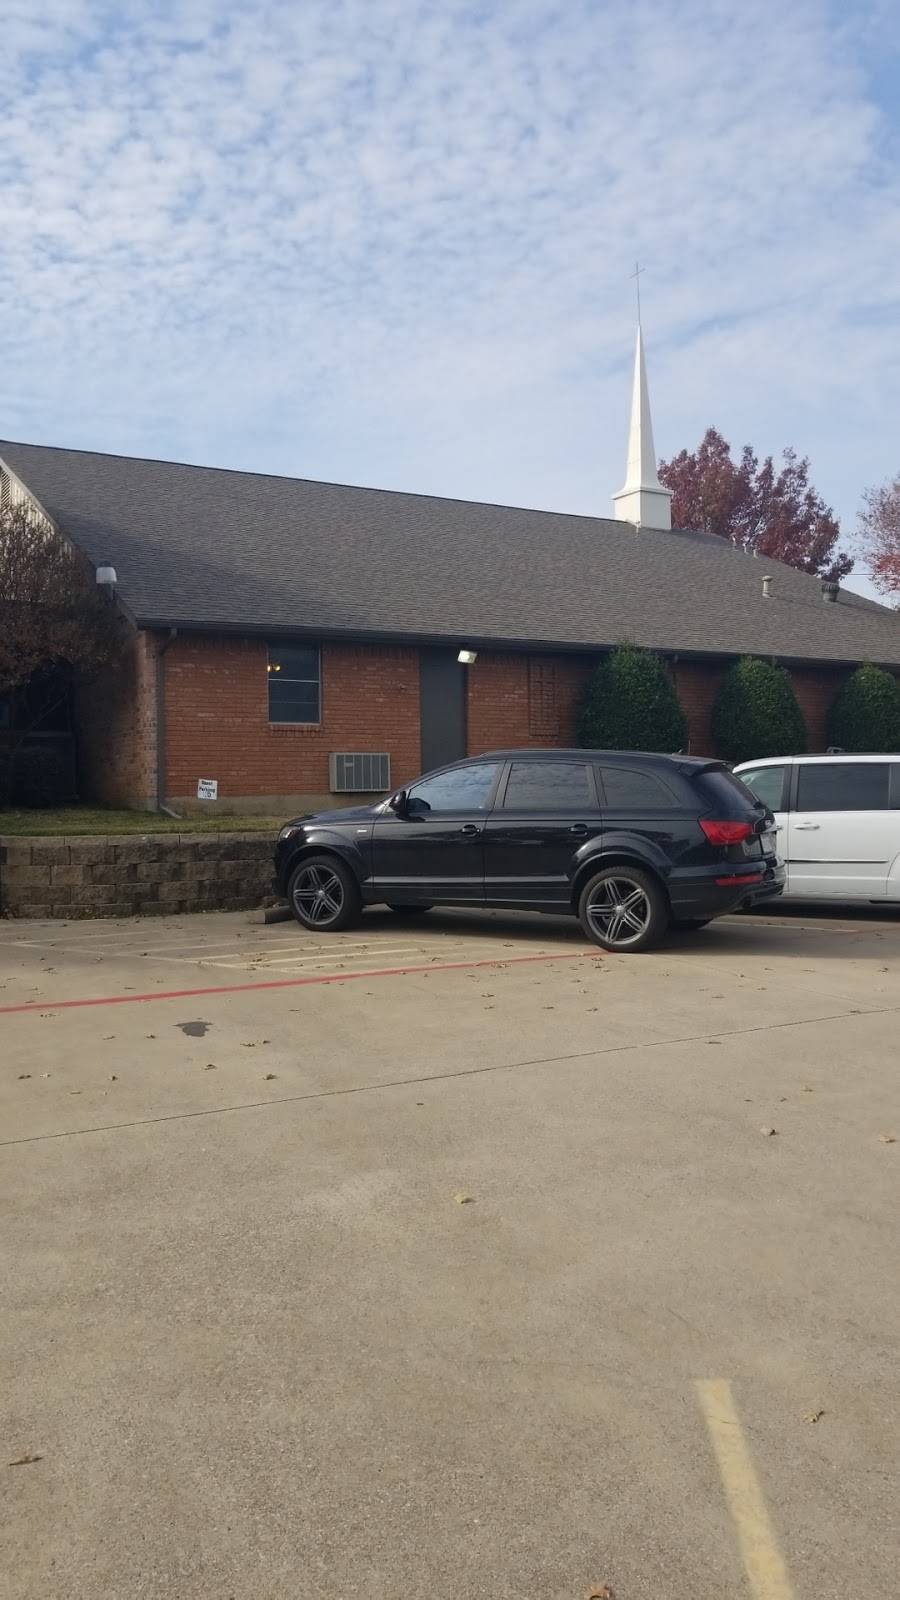 New Day Church at Southlake | 101 E Highland St, Southlake, TX 76092, USA | Phone: (817) 488-8433